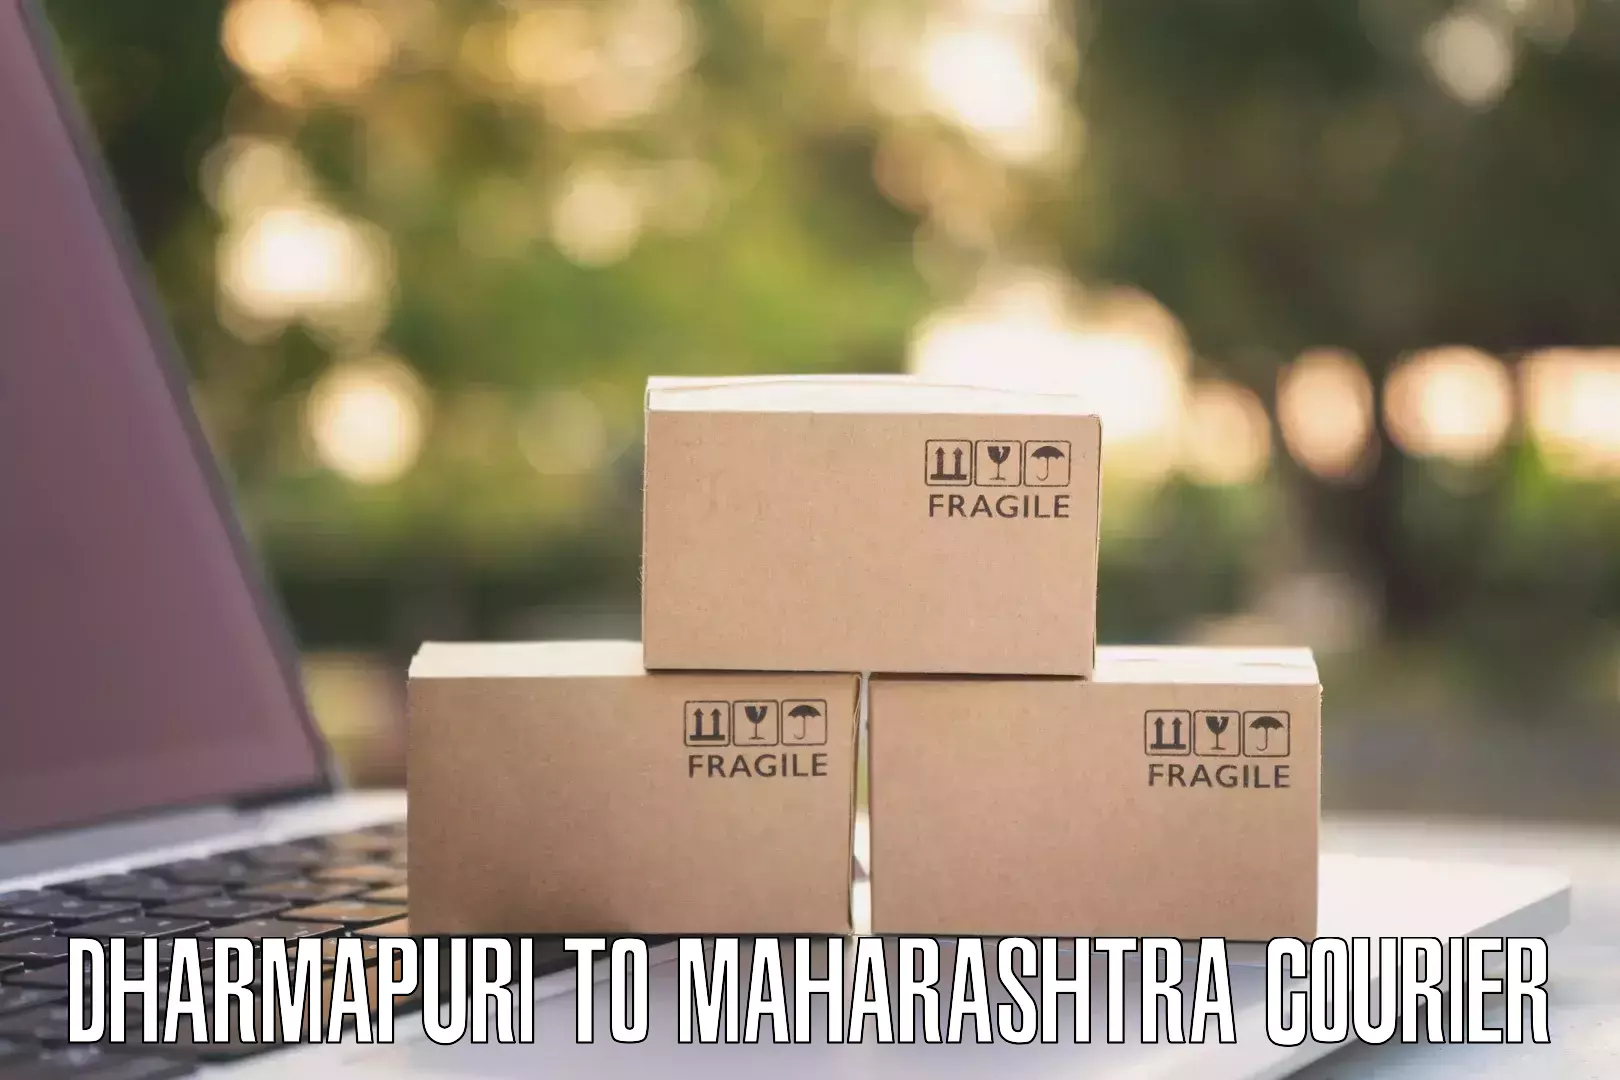 Courier service comparison Dharmapuri to Ahmednagar